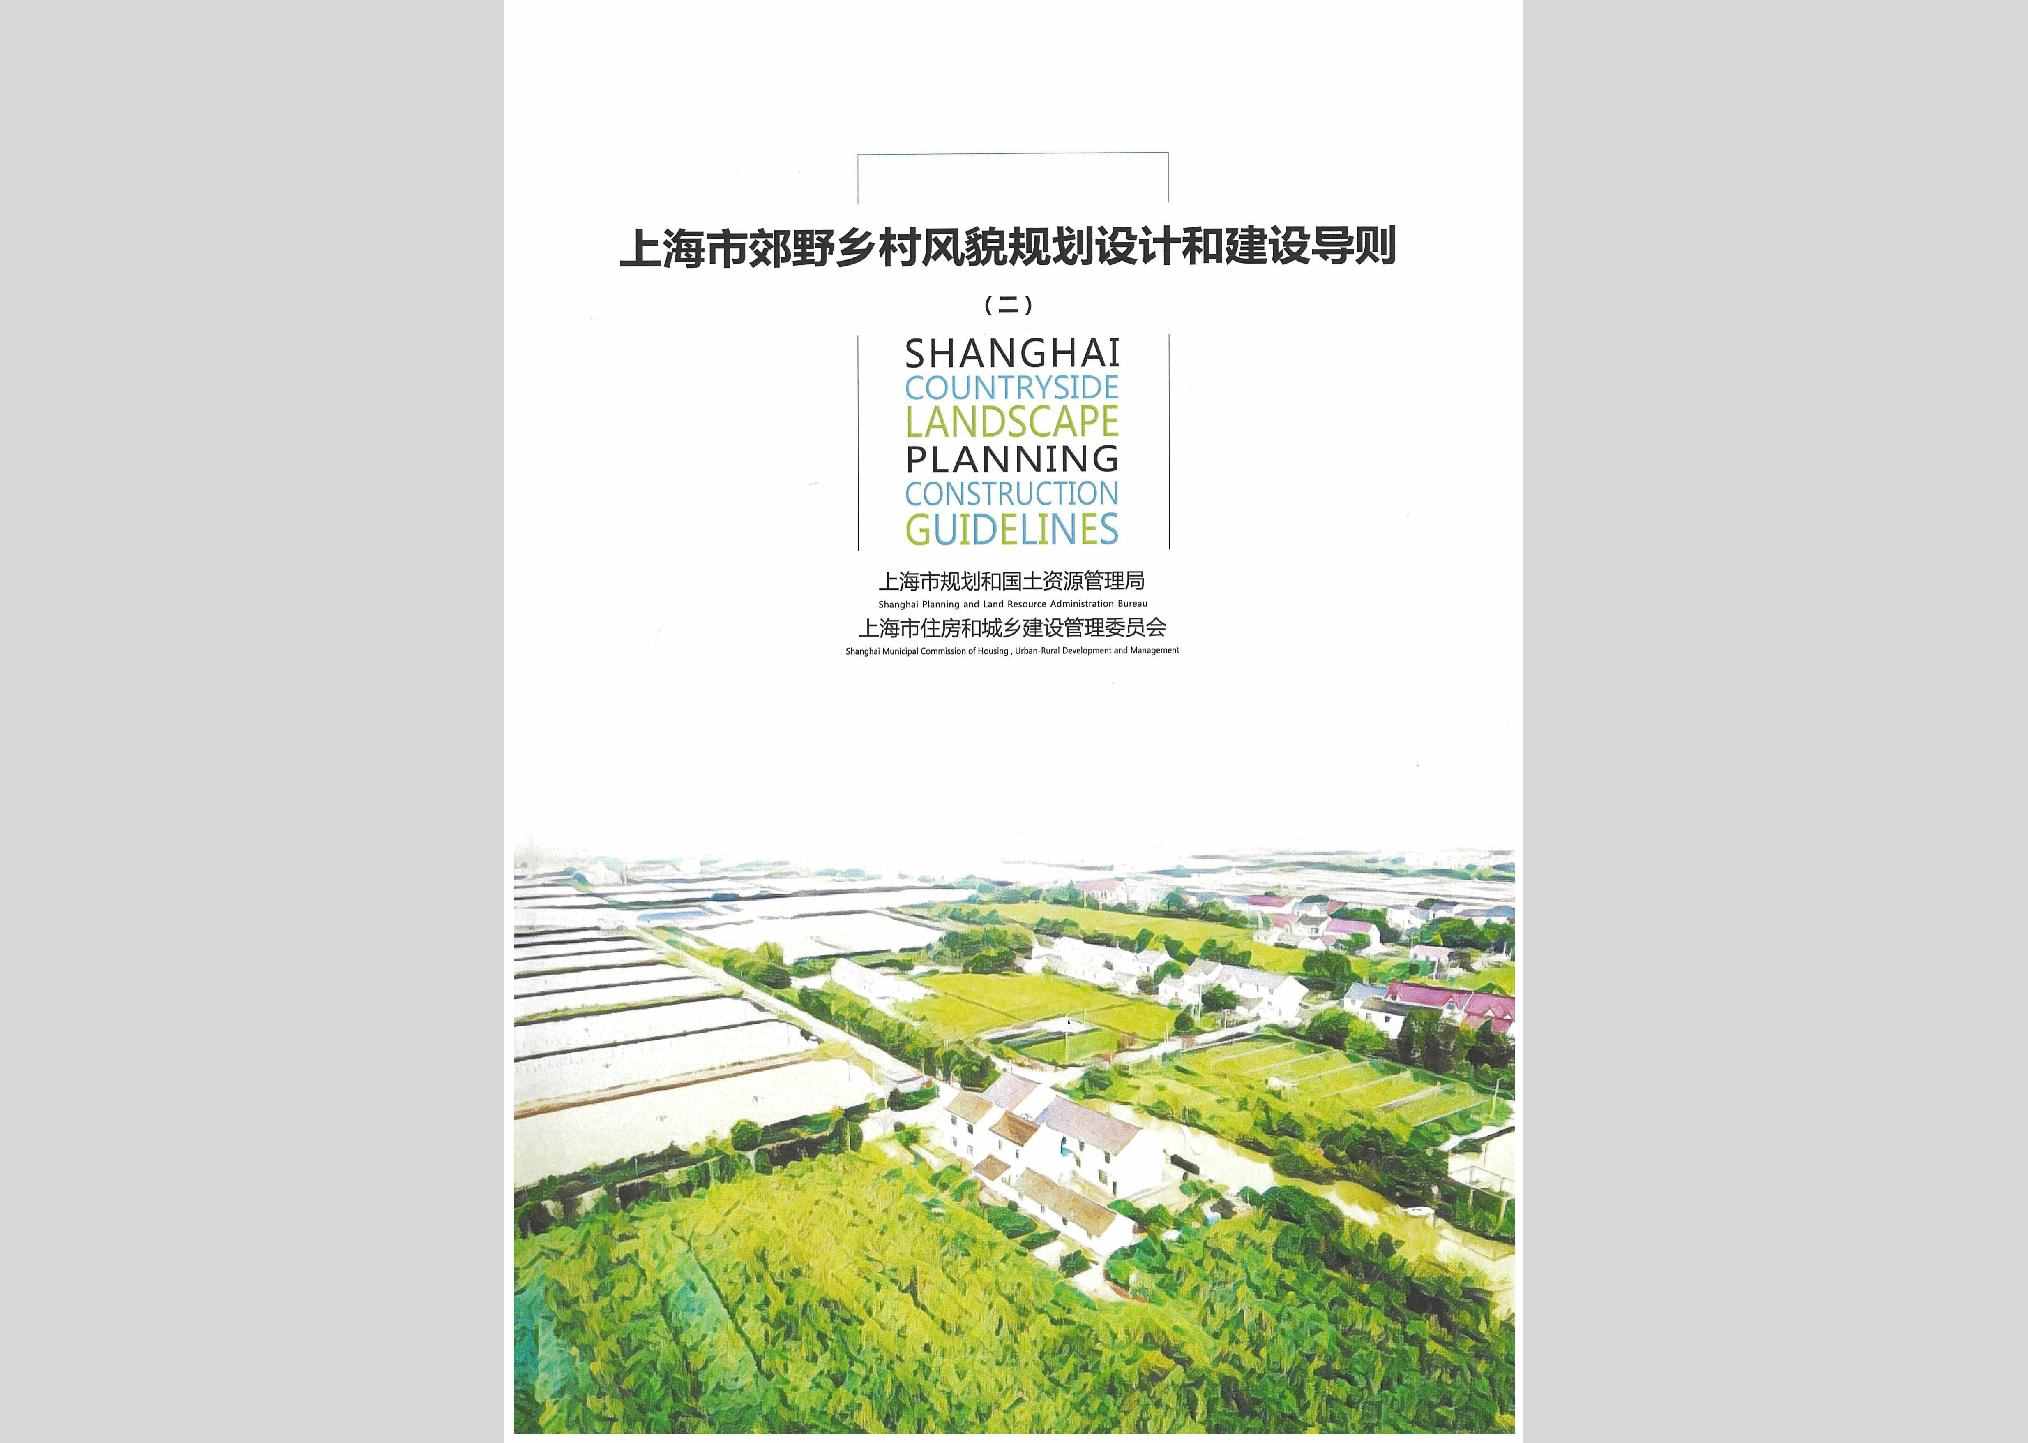 JYXCFMGH2：上海市郊野乡村风貌规划设计和建设导则（二）